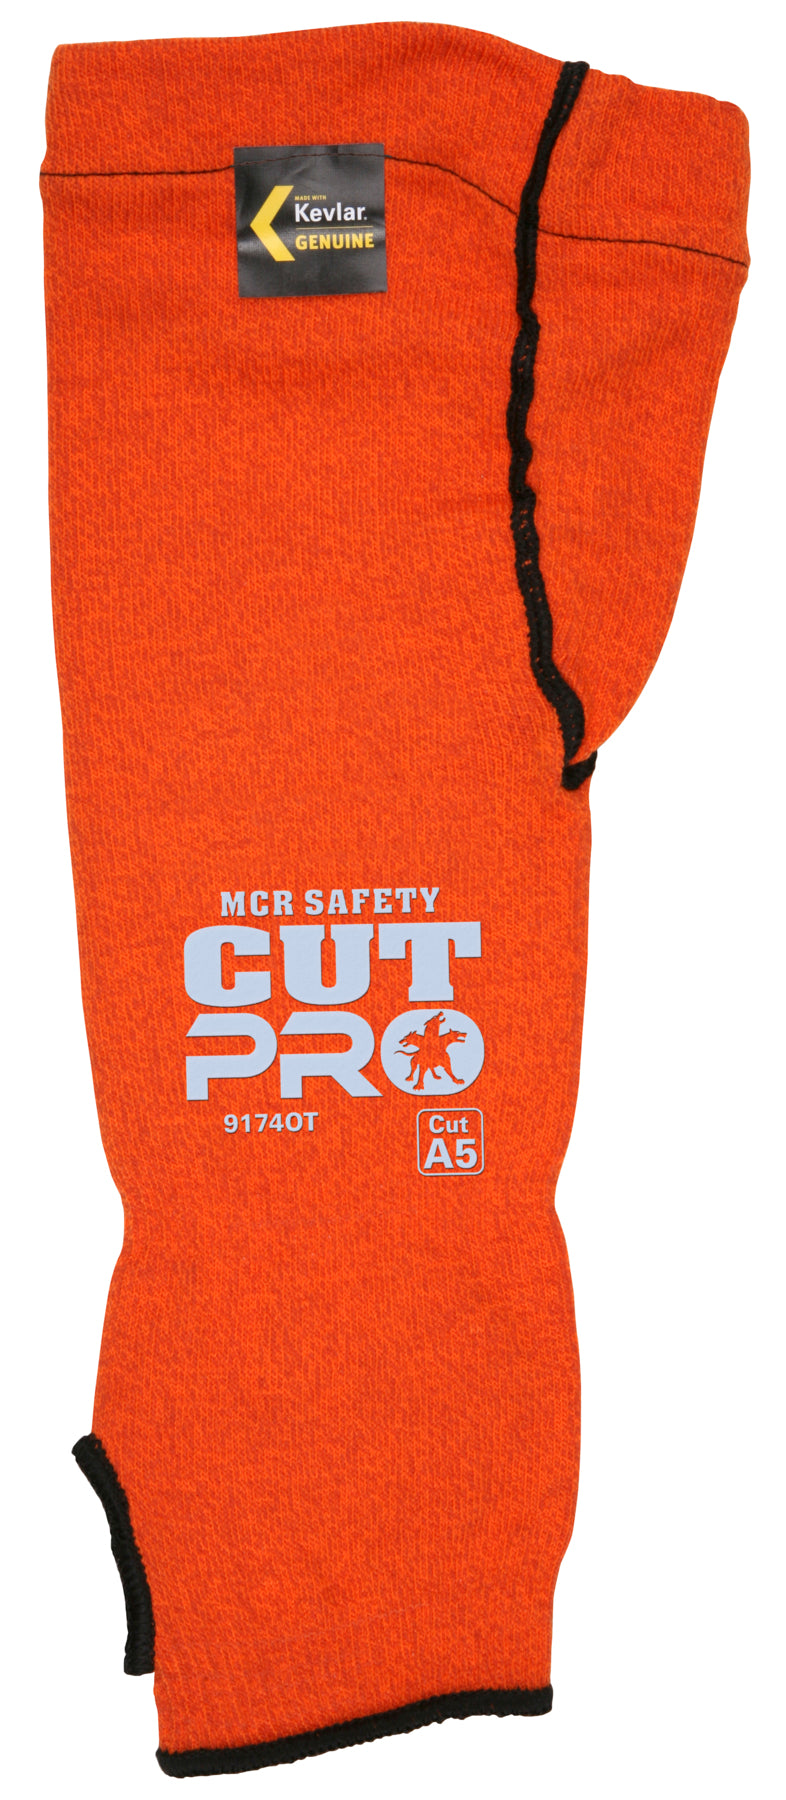 9174OT - Cut Pro® Orange Kevlar® Sleeve Cut A5